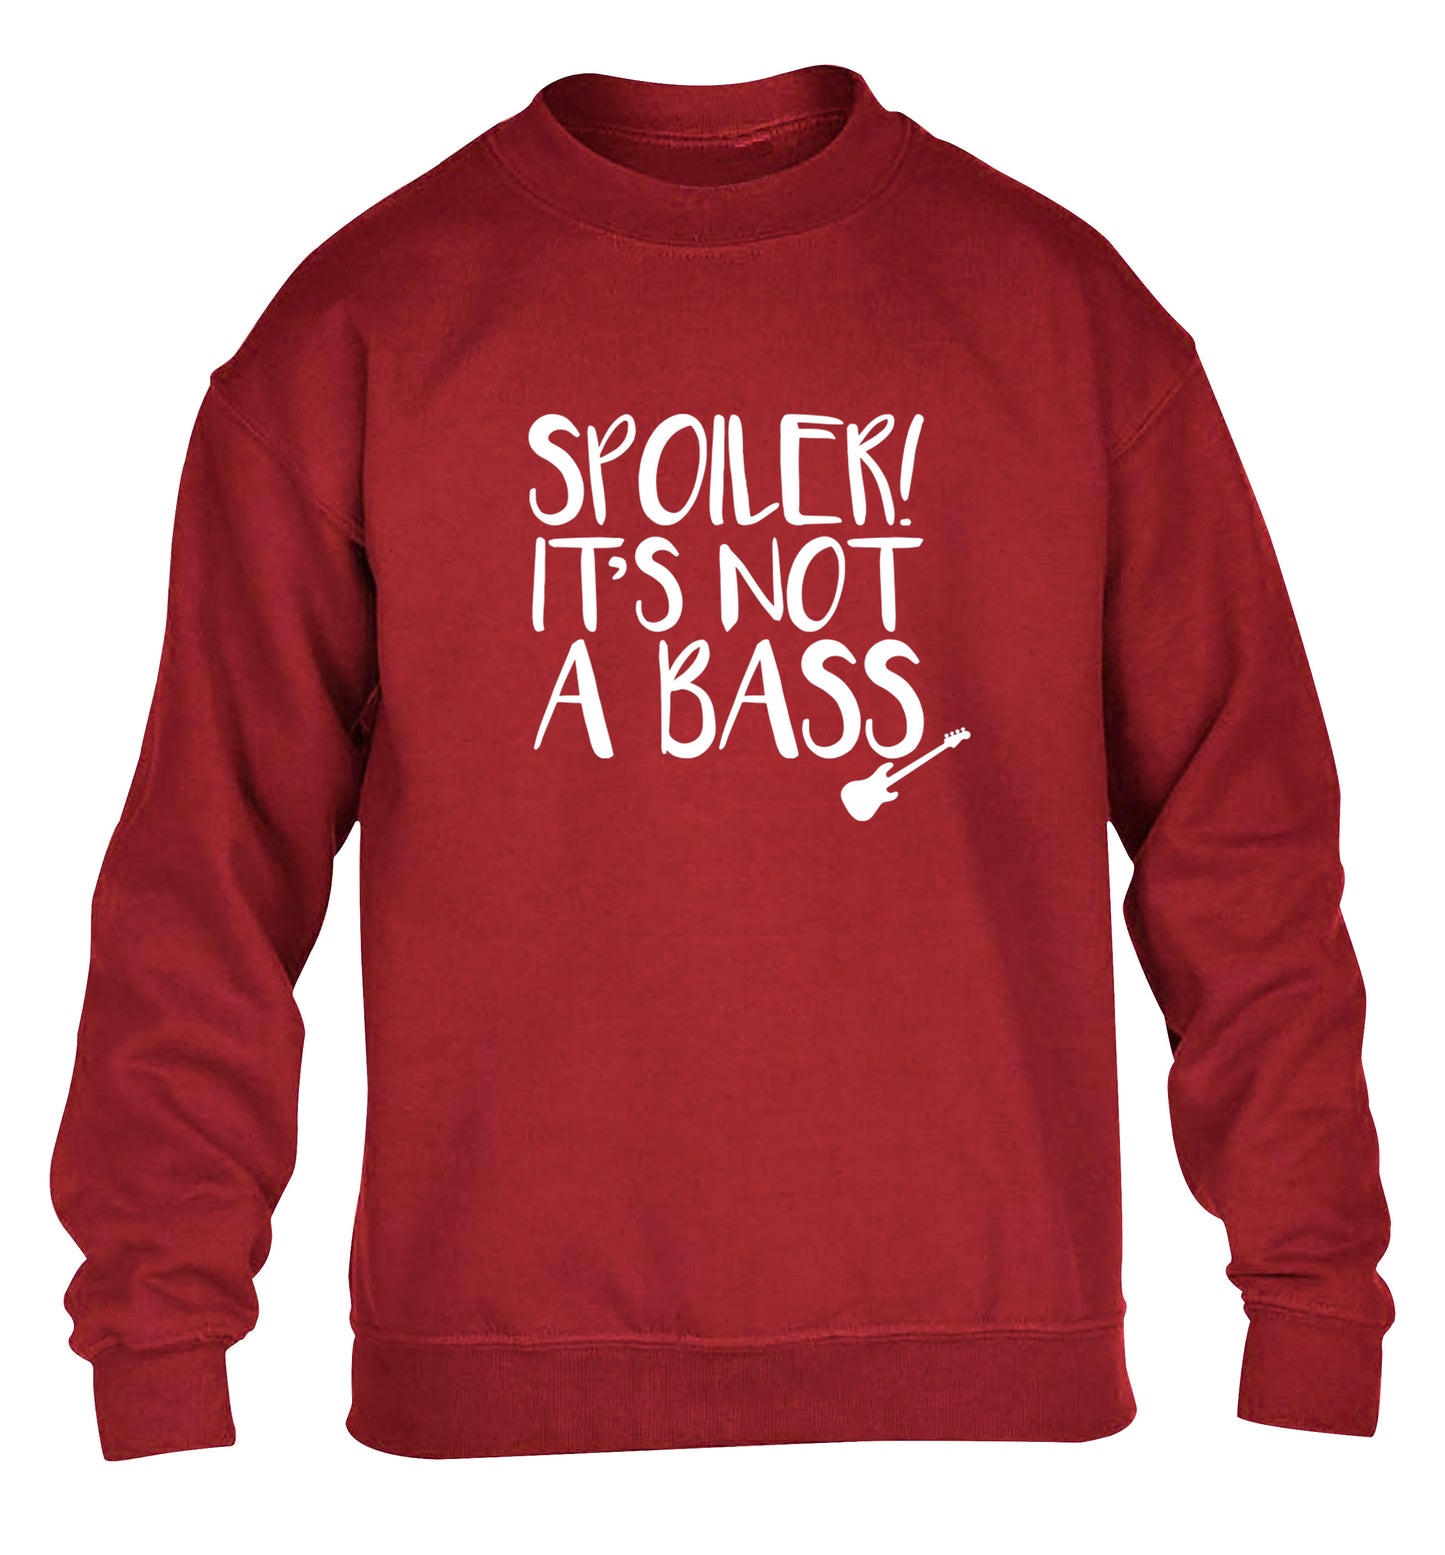 Spoiler it's not a bass children's grey sweater 12-13 Years